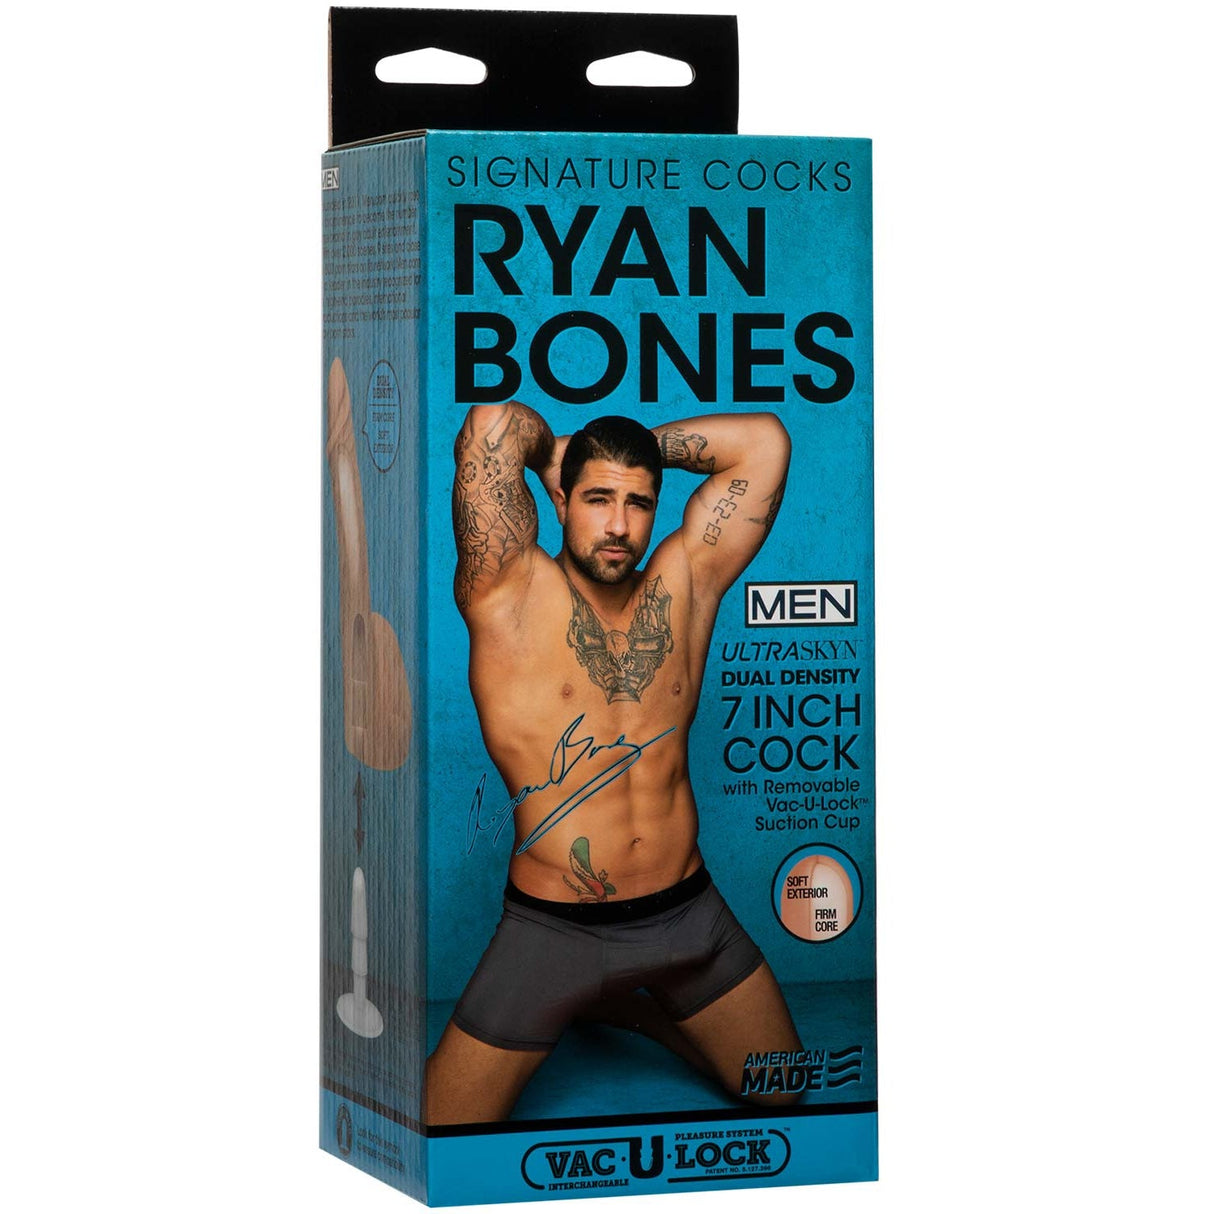 Signature Cocks Ryan Bones Ultraskyn 7 Inch Dildo